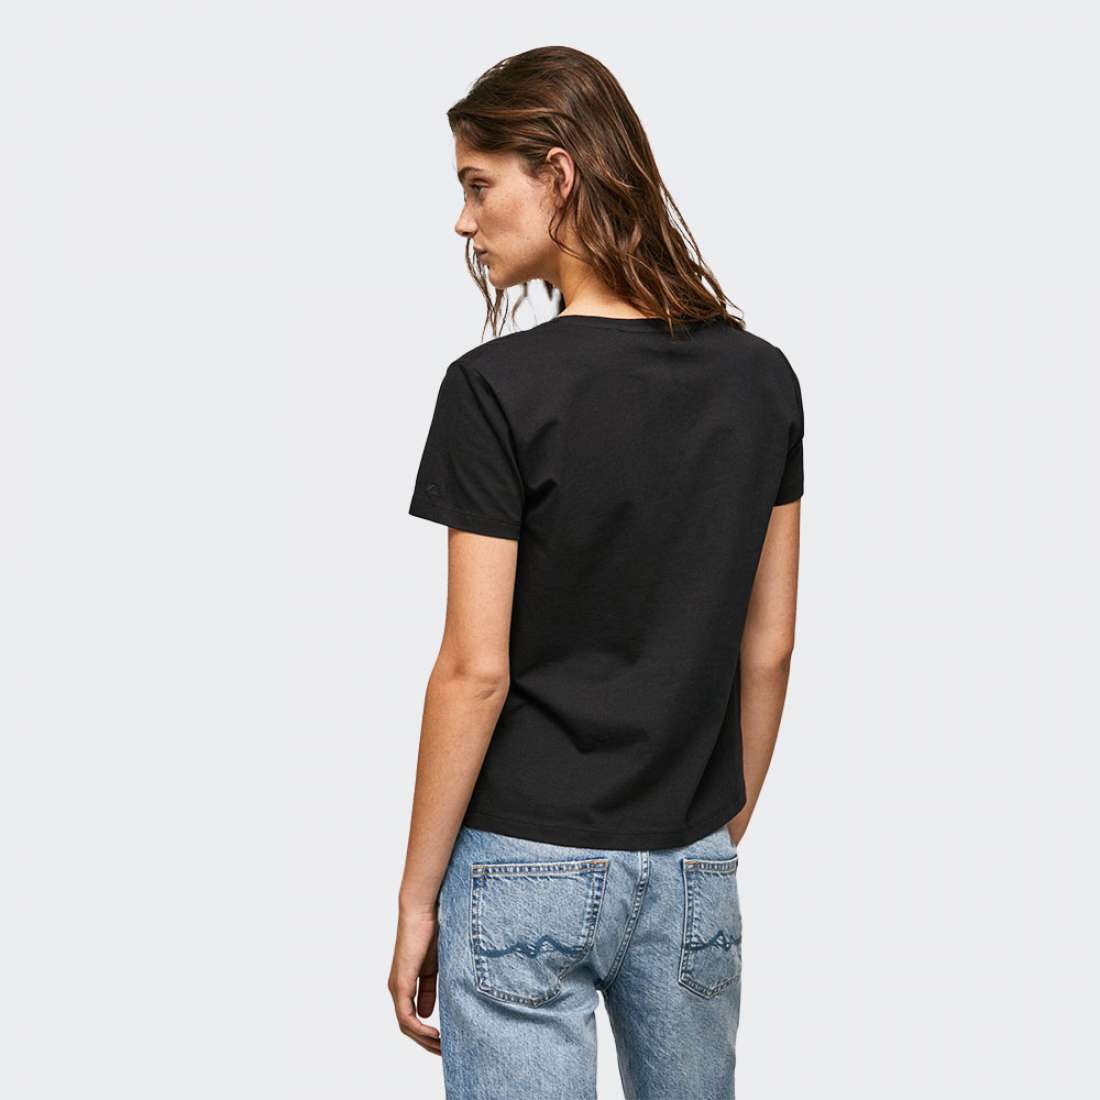 Lpoint® Black Pl505402-999 Lali - Tshirt Grupo Jeans Pepe